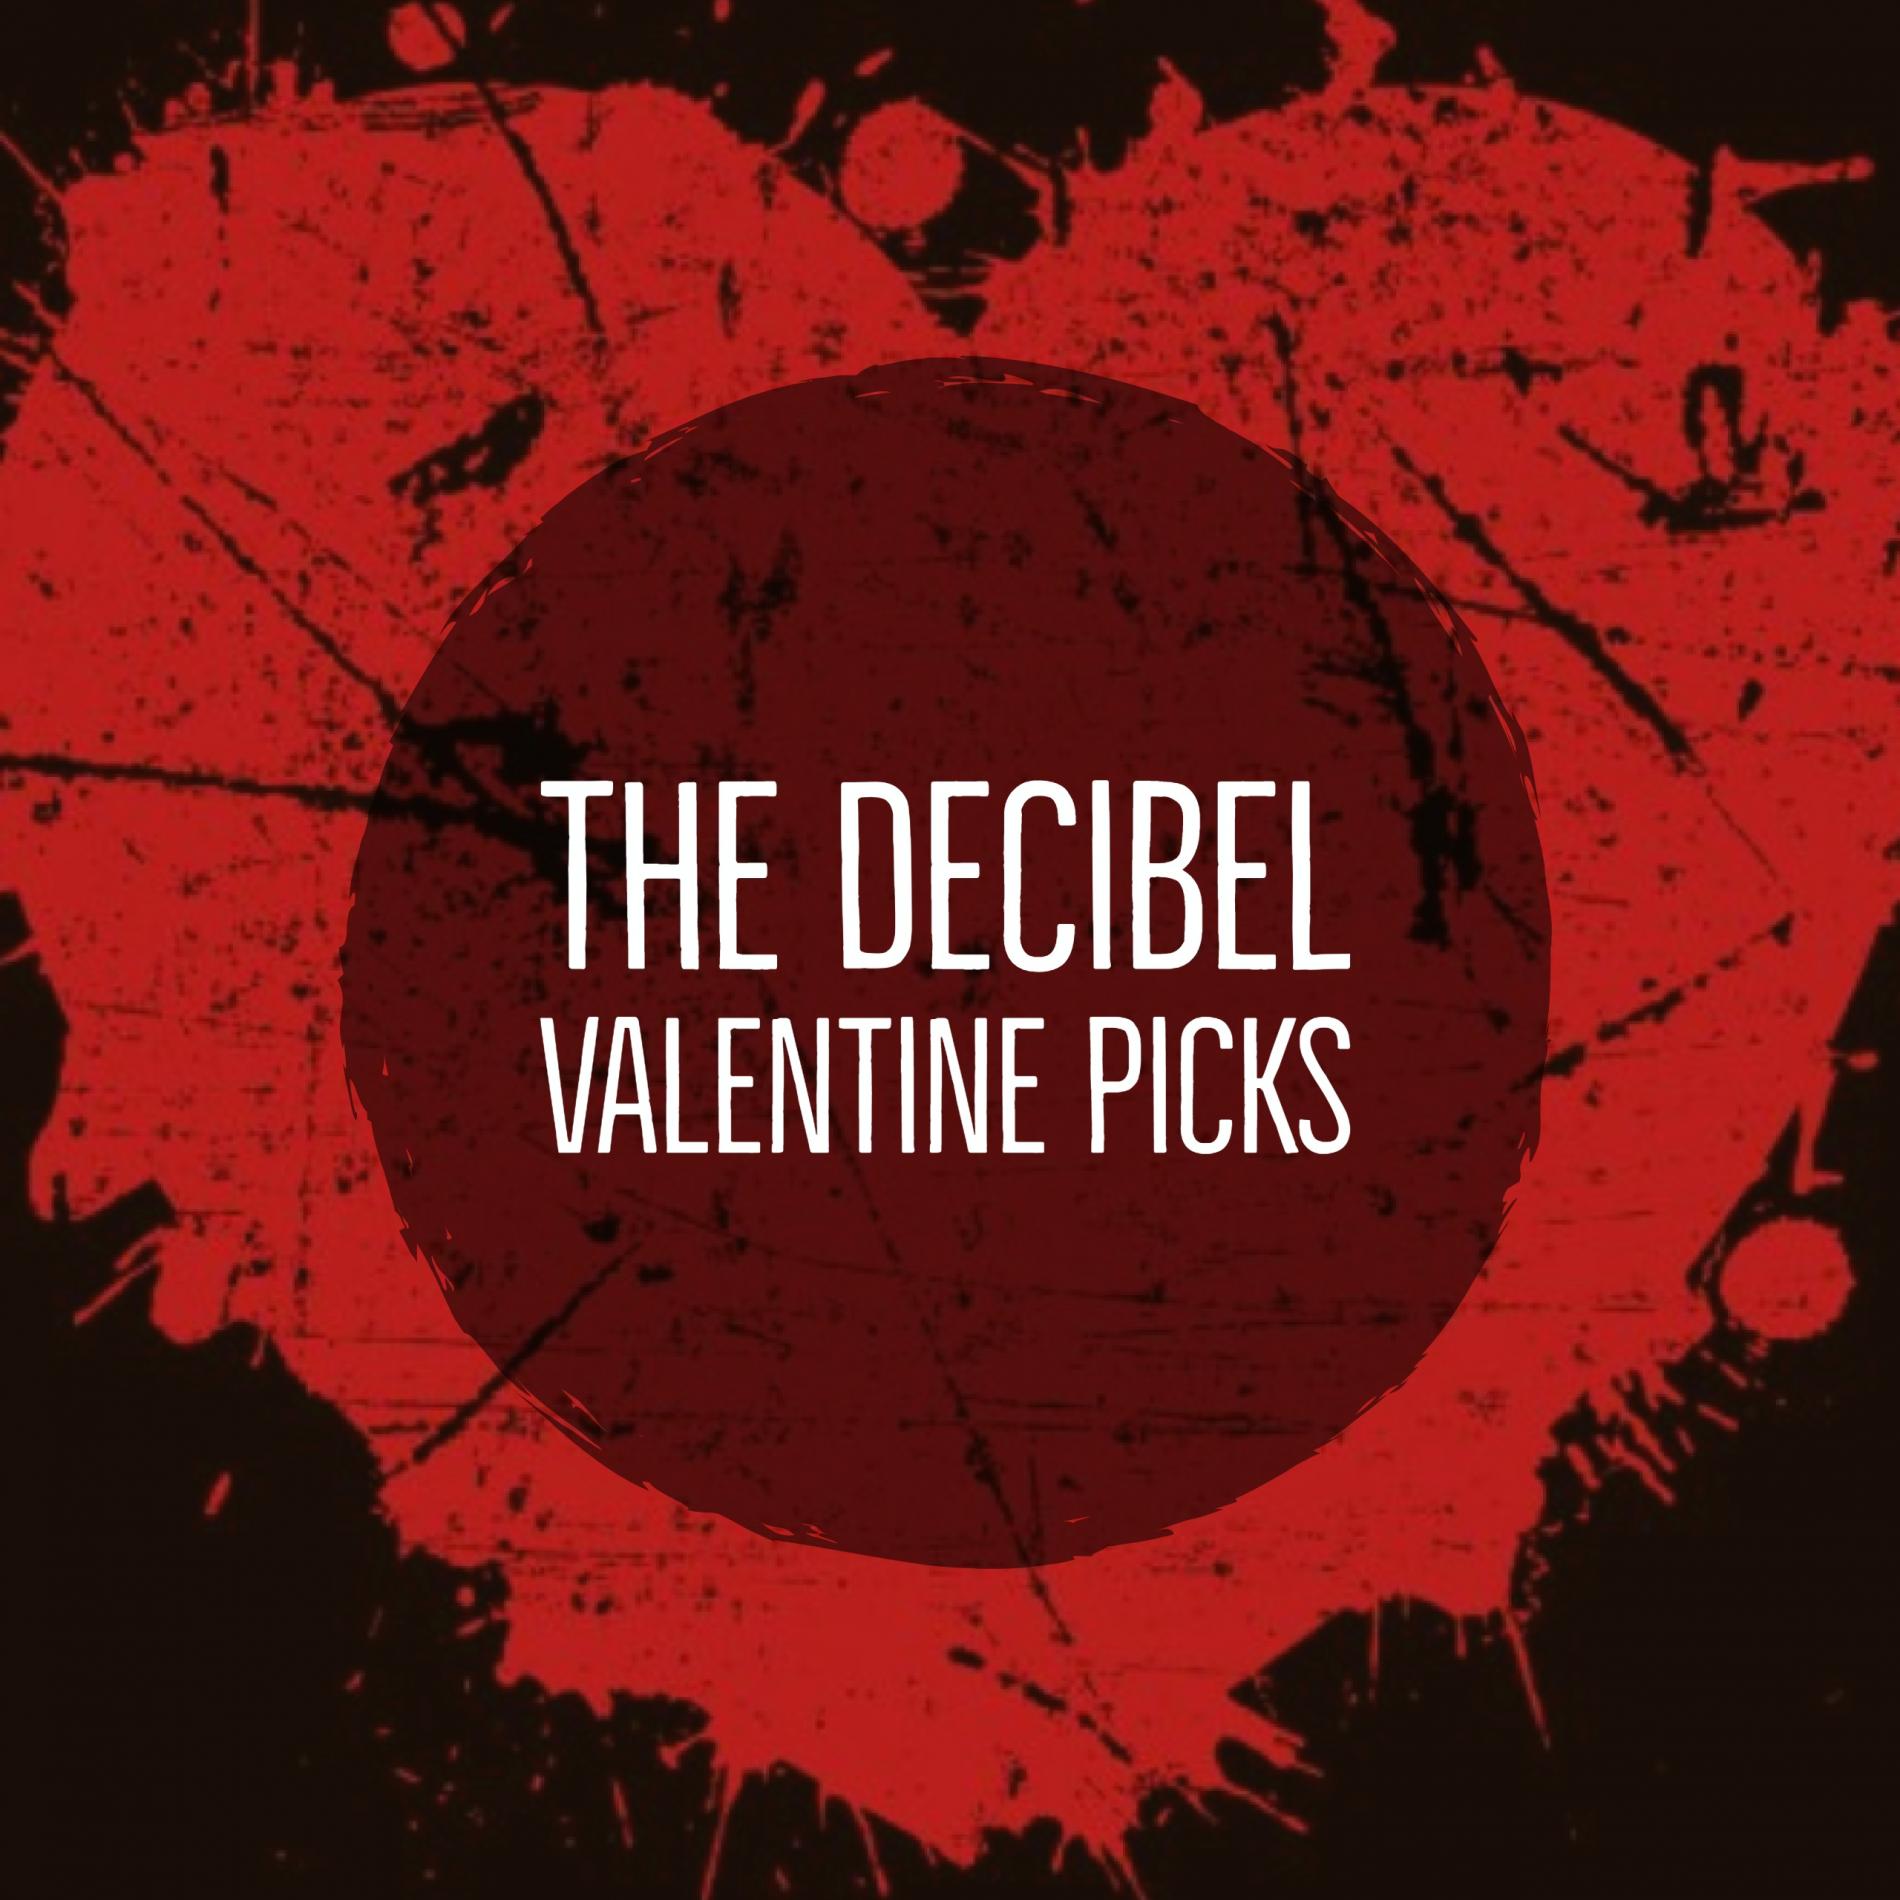 The Decibel Valentine Picks